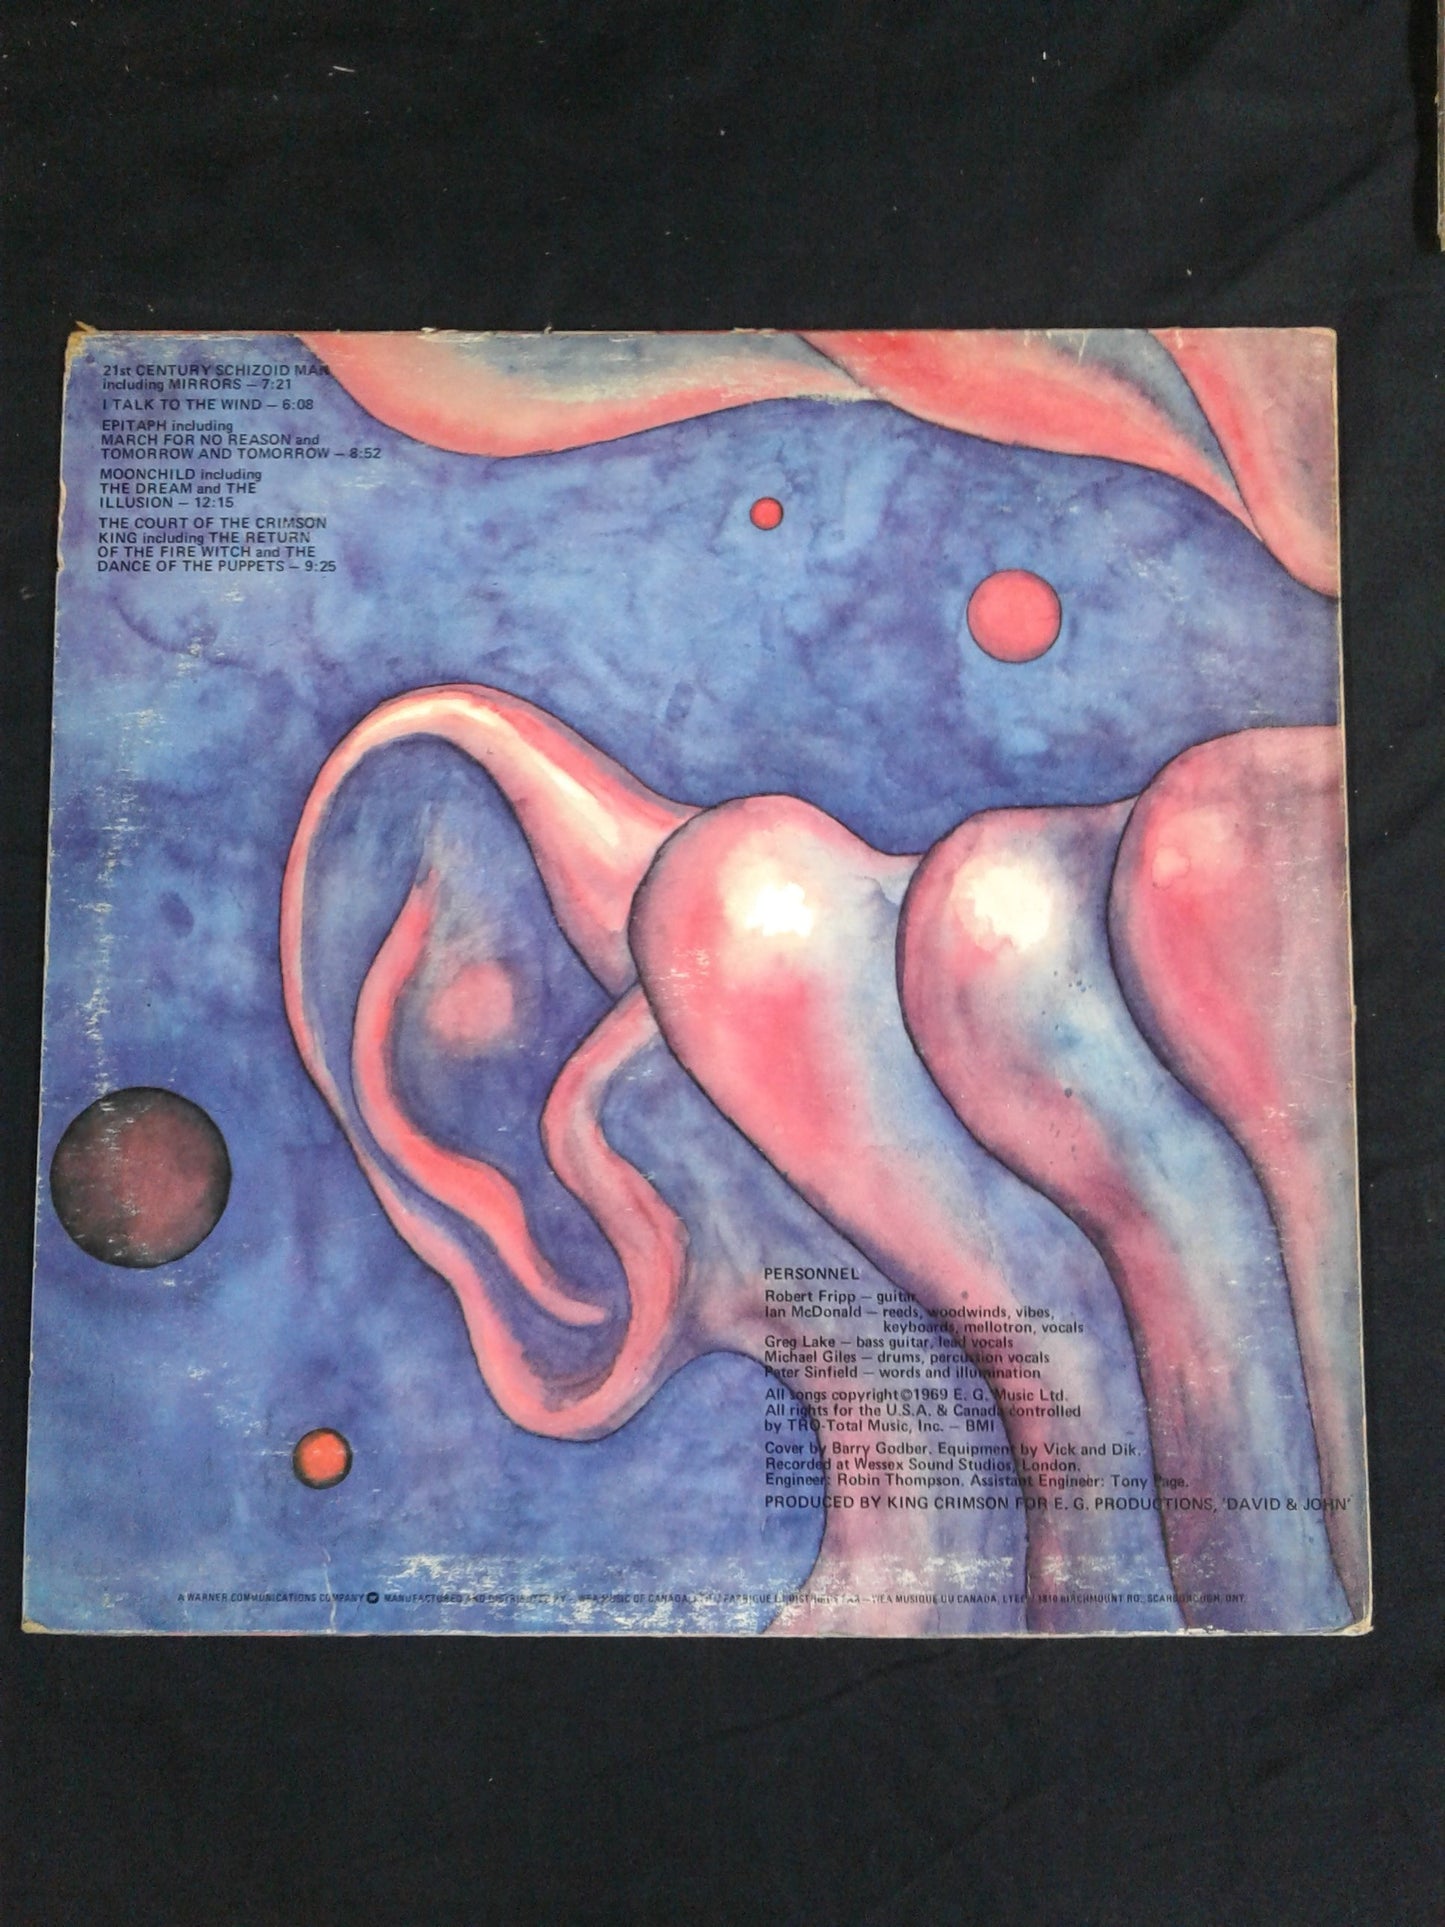 Vinyle King Crimson